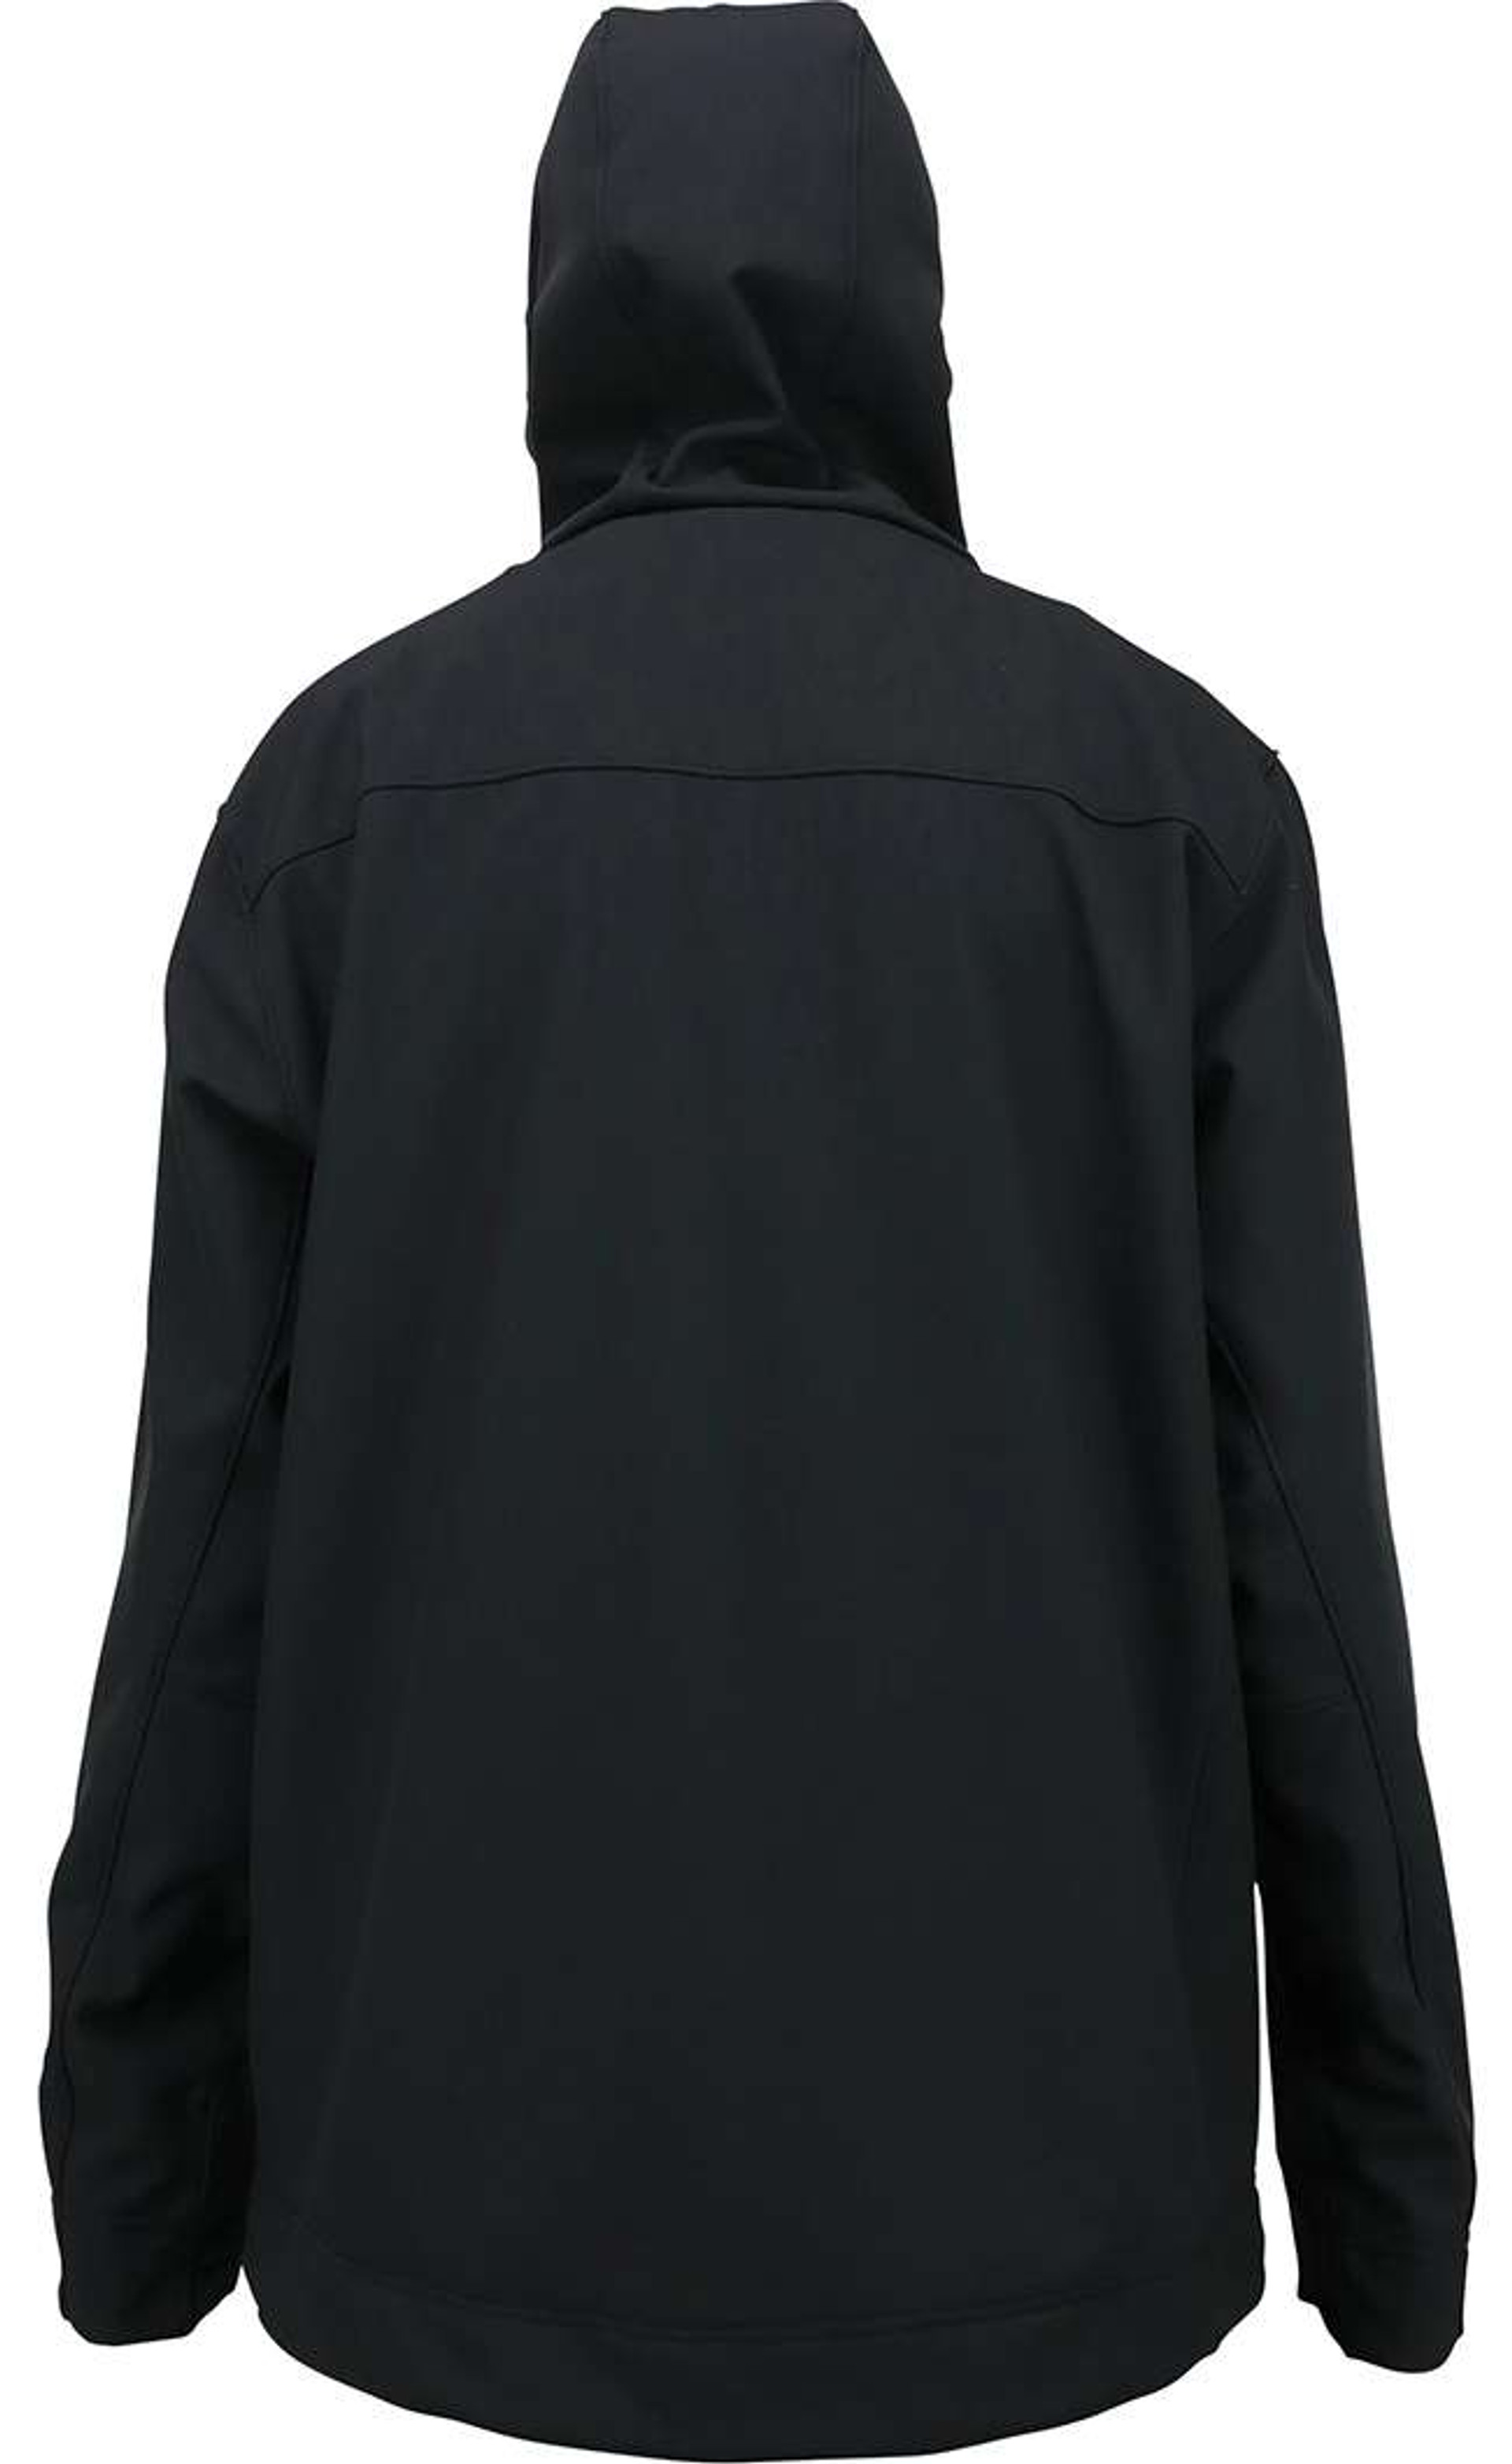 Aftco Reaper Softshell Jacket - Black - TackleDirect